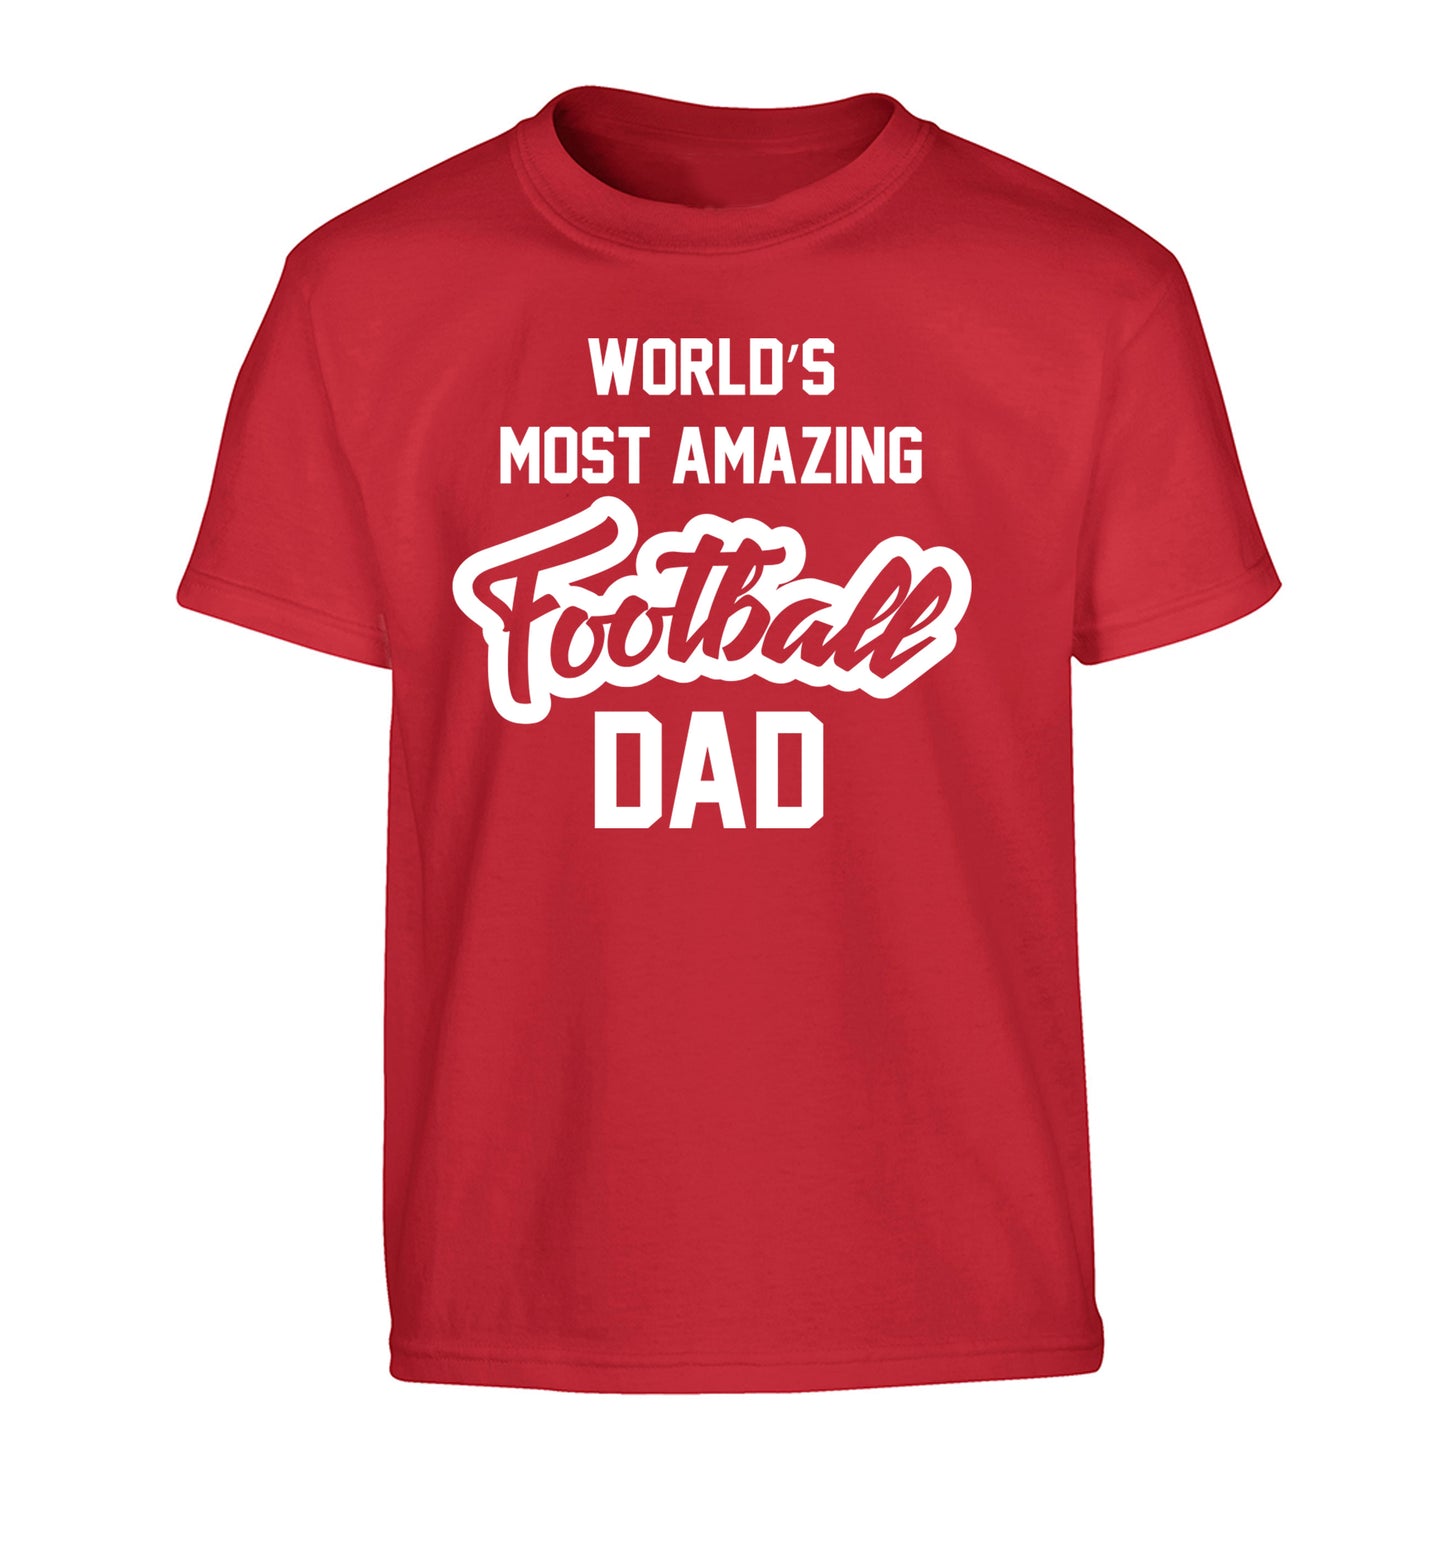 Worlds most amazing football dad Children's red Tshirt 12-14 Years